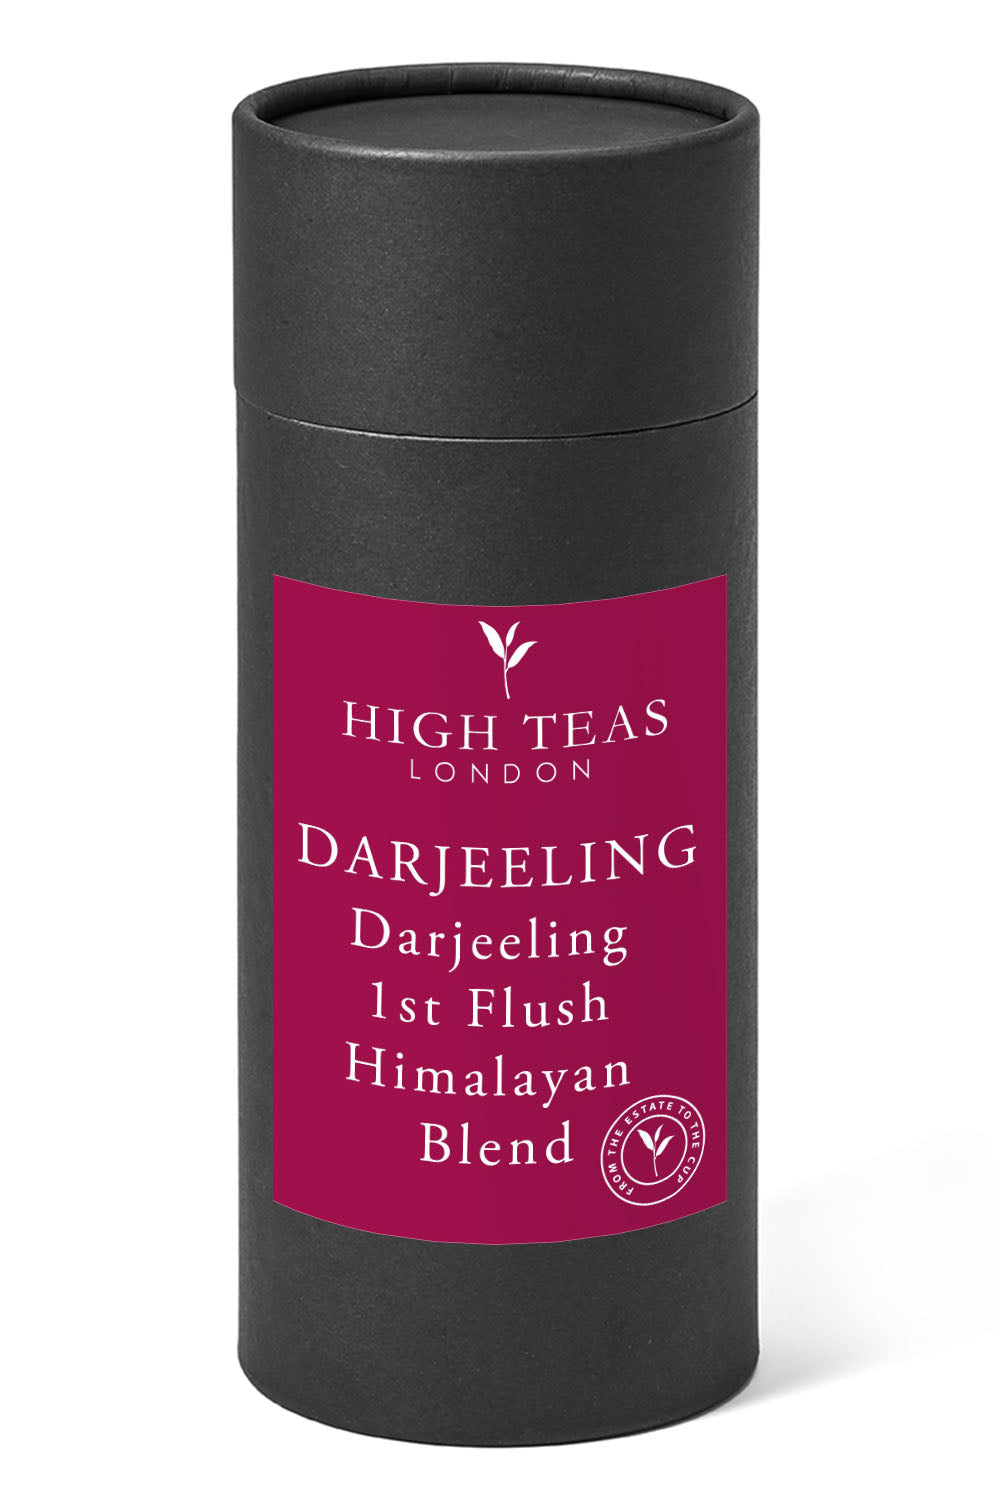 Darjeeling 2nd Flush Himalayan Blend-150g gift-Loose Leaf Tea-High Teas